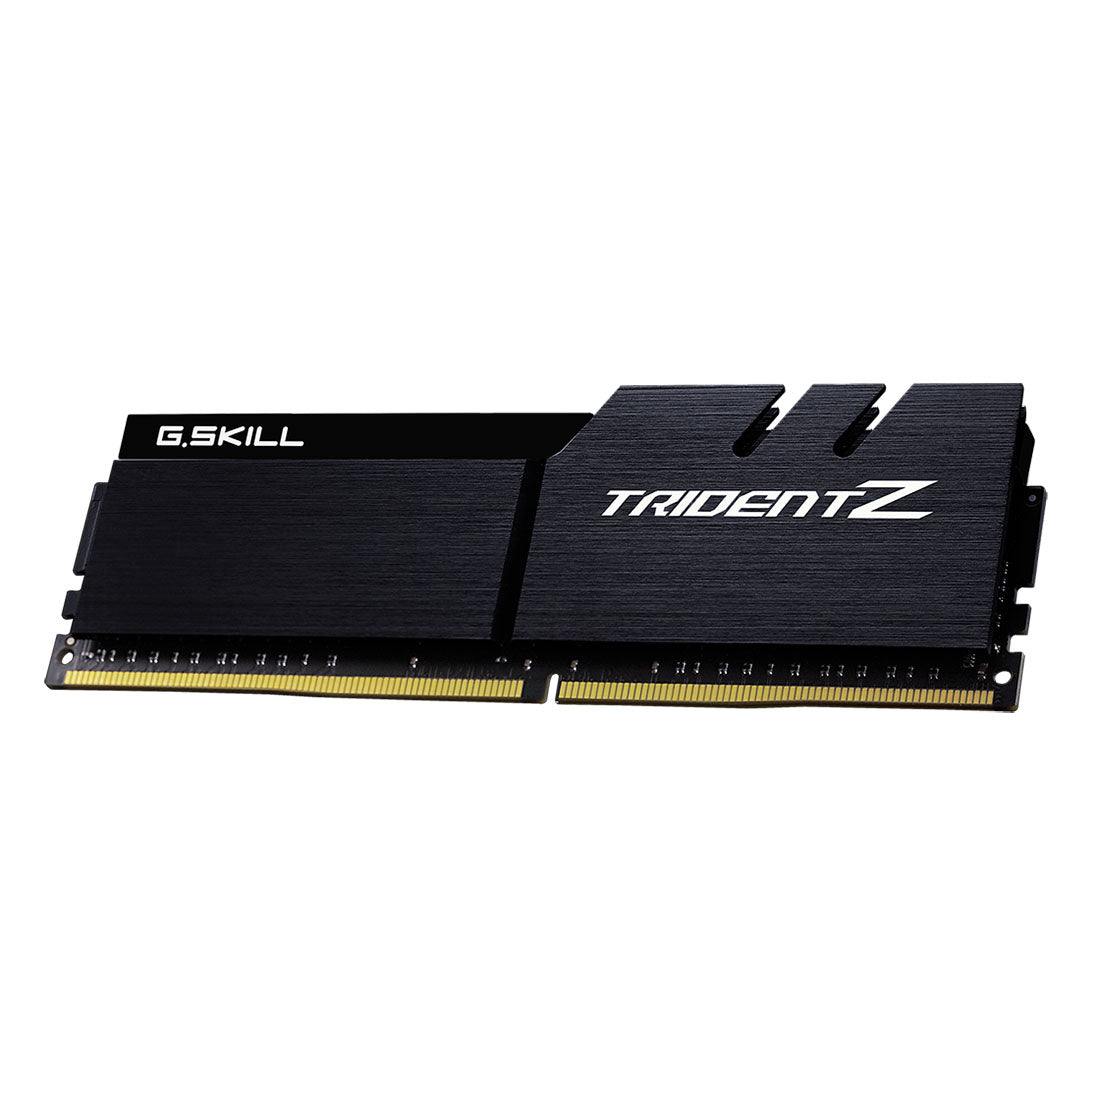 G.SKILL Trident Z 16GB(2x8GB) DDR4 RAM 4400MHz Desktop Memory